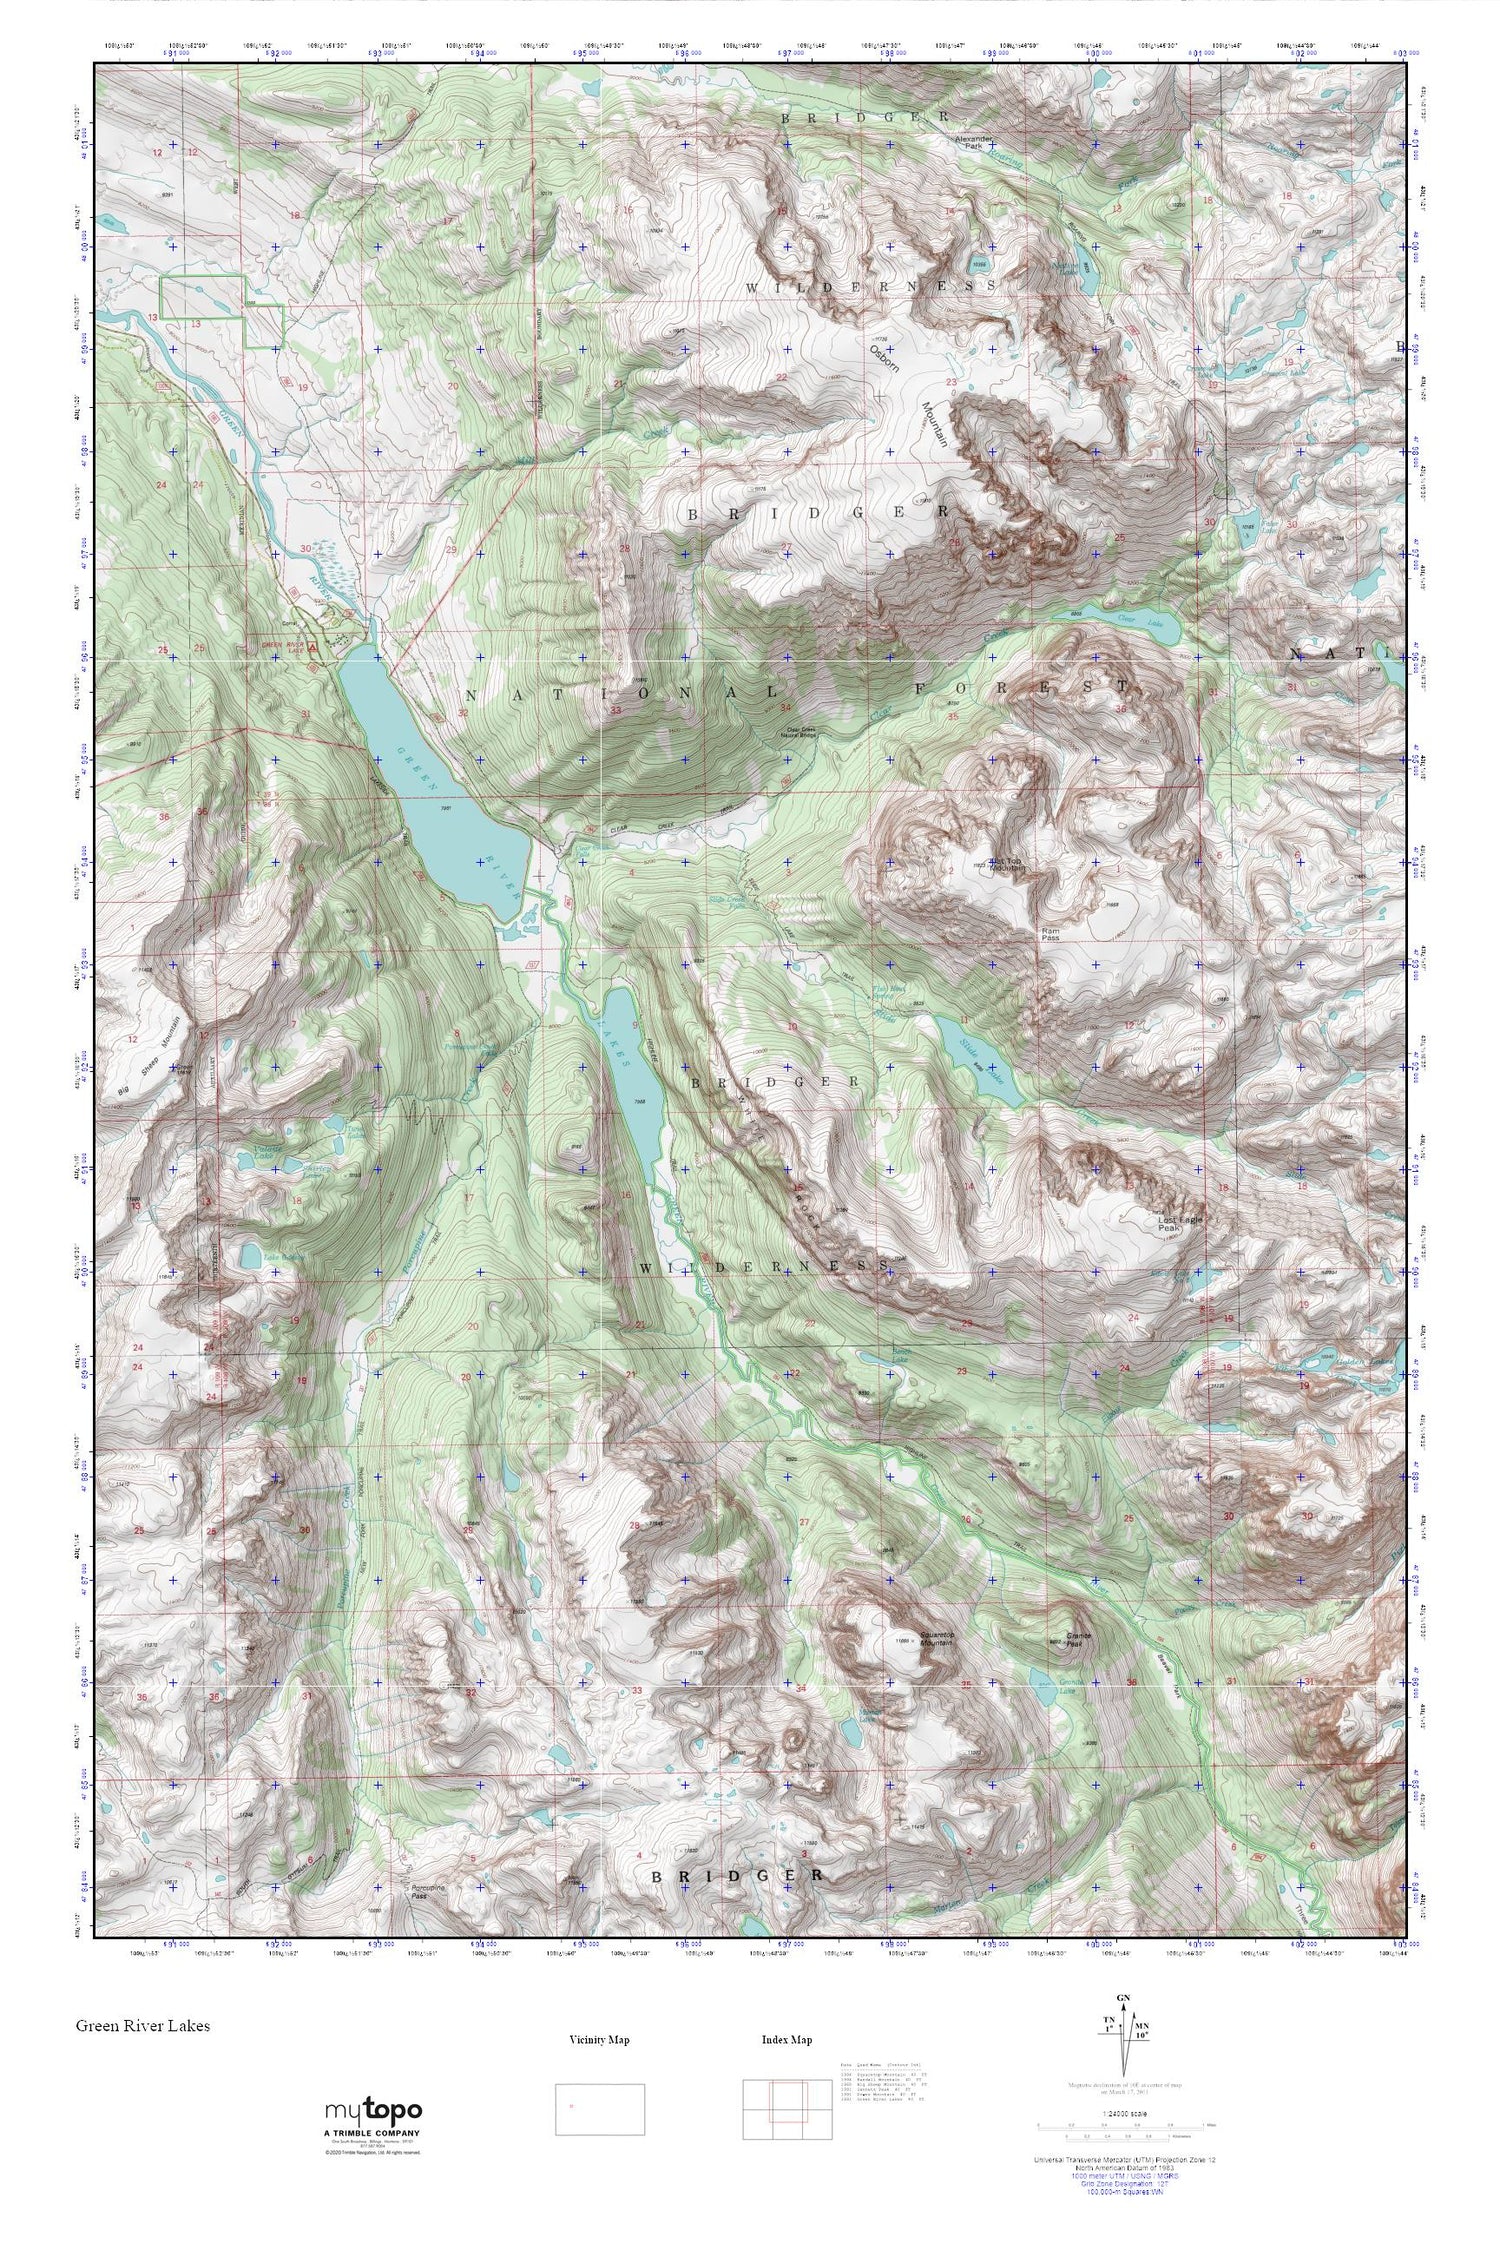 Green River Lakes MyTopo Explorer Series Map Image